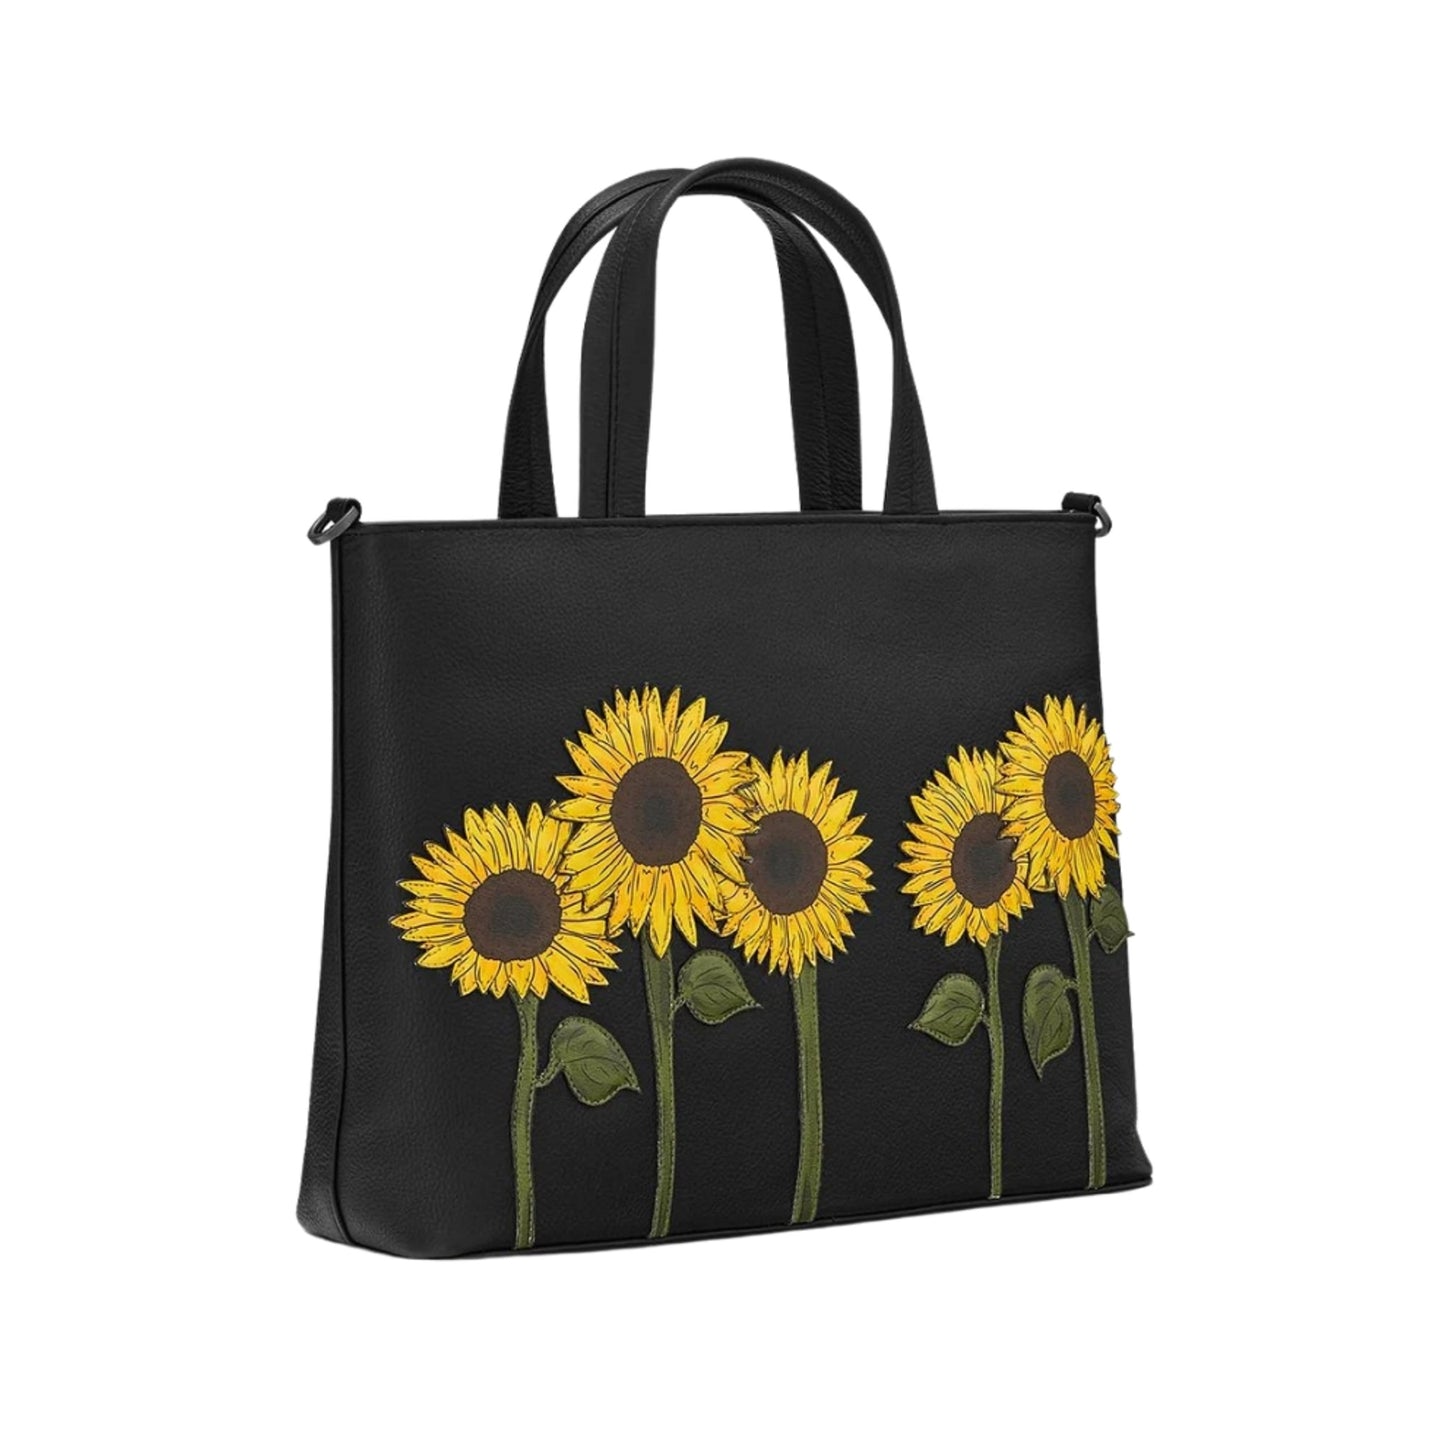 Yoshi Goods Leather Sunflower bag NZ